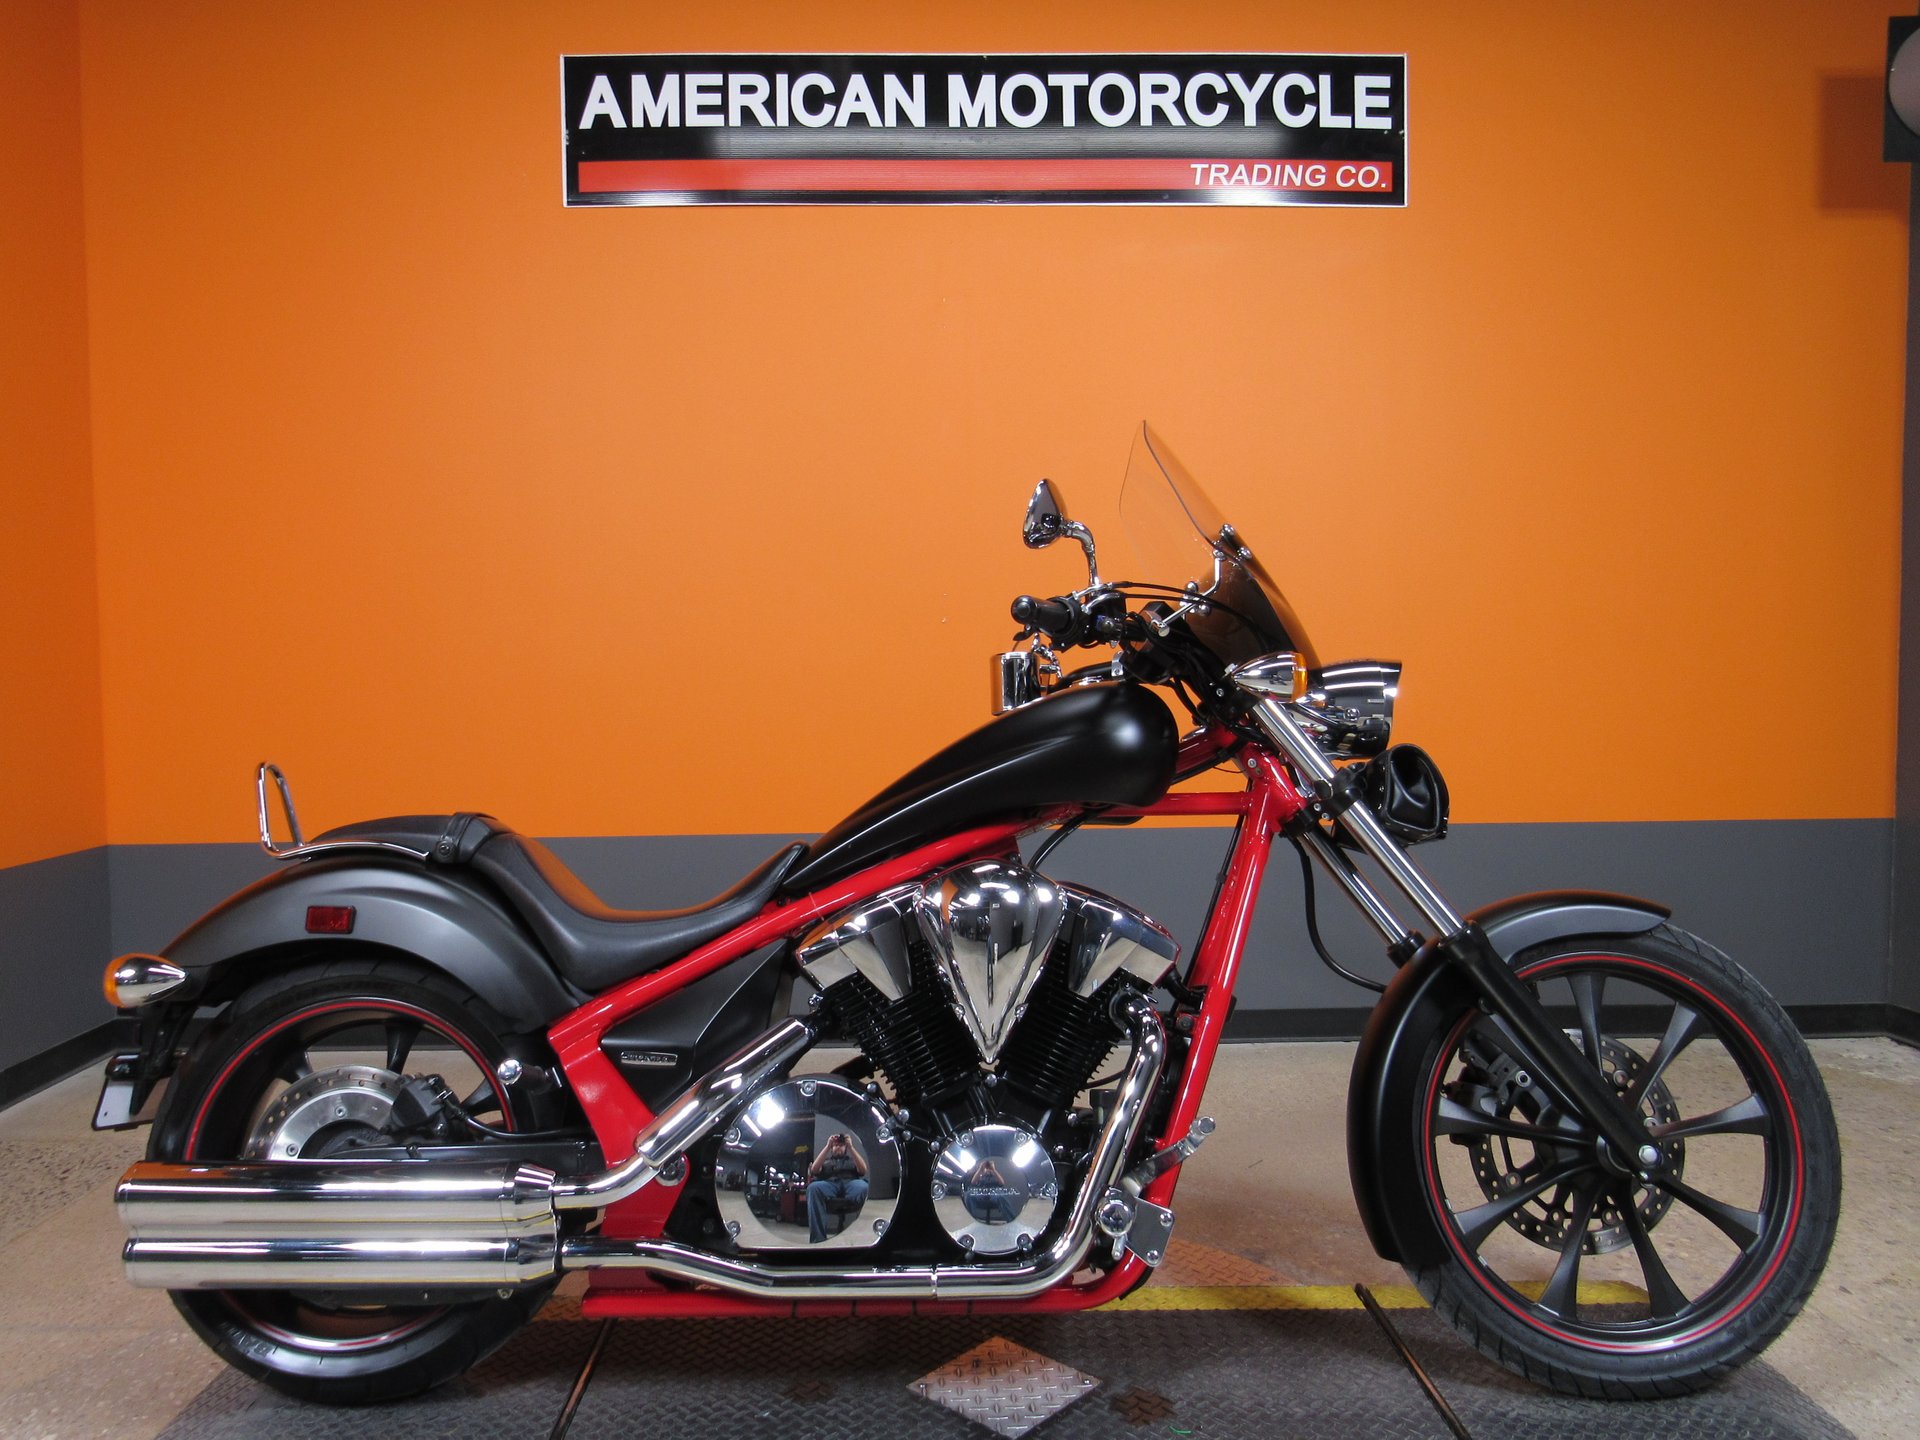 2012 Honda Fury | American Motorcycle Trading Company - Used Harley ...